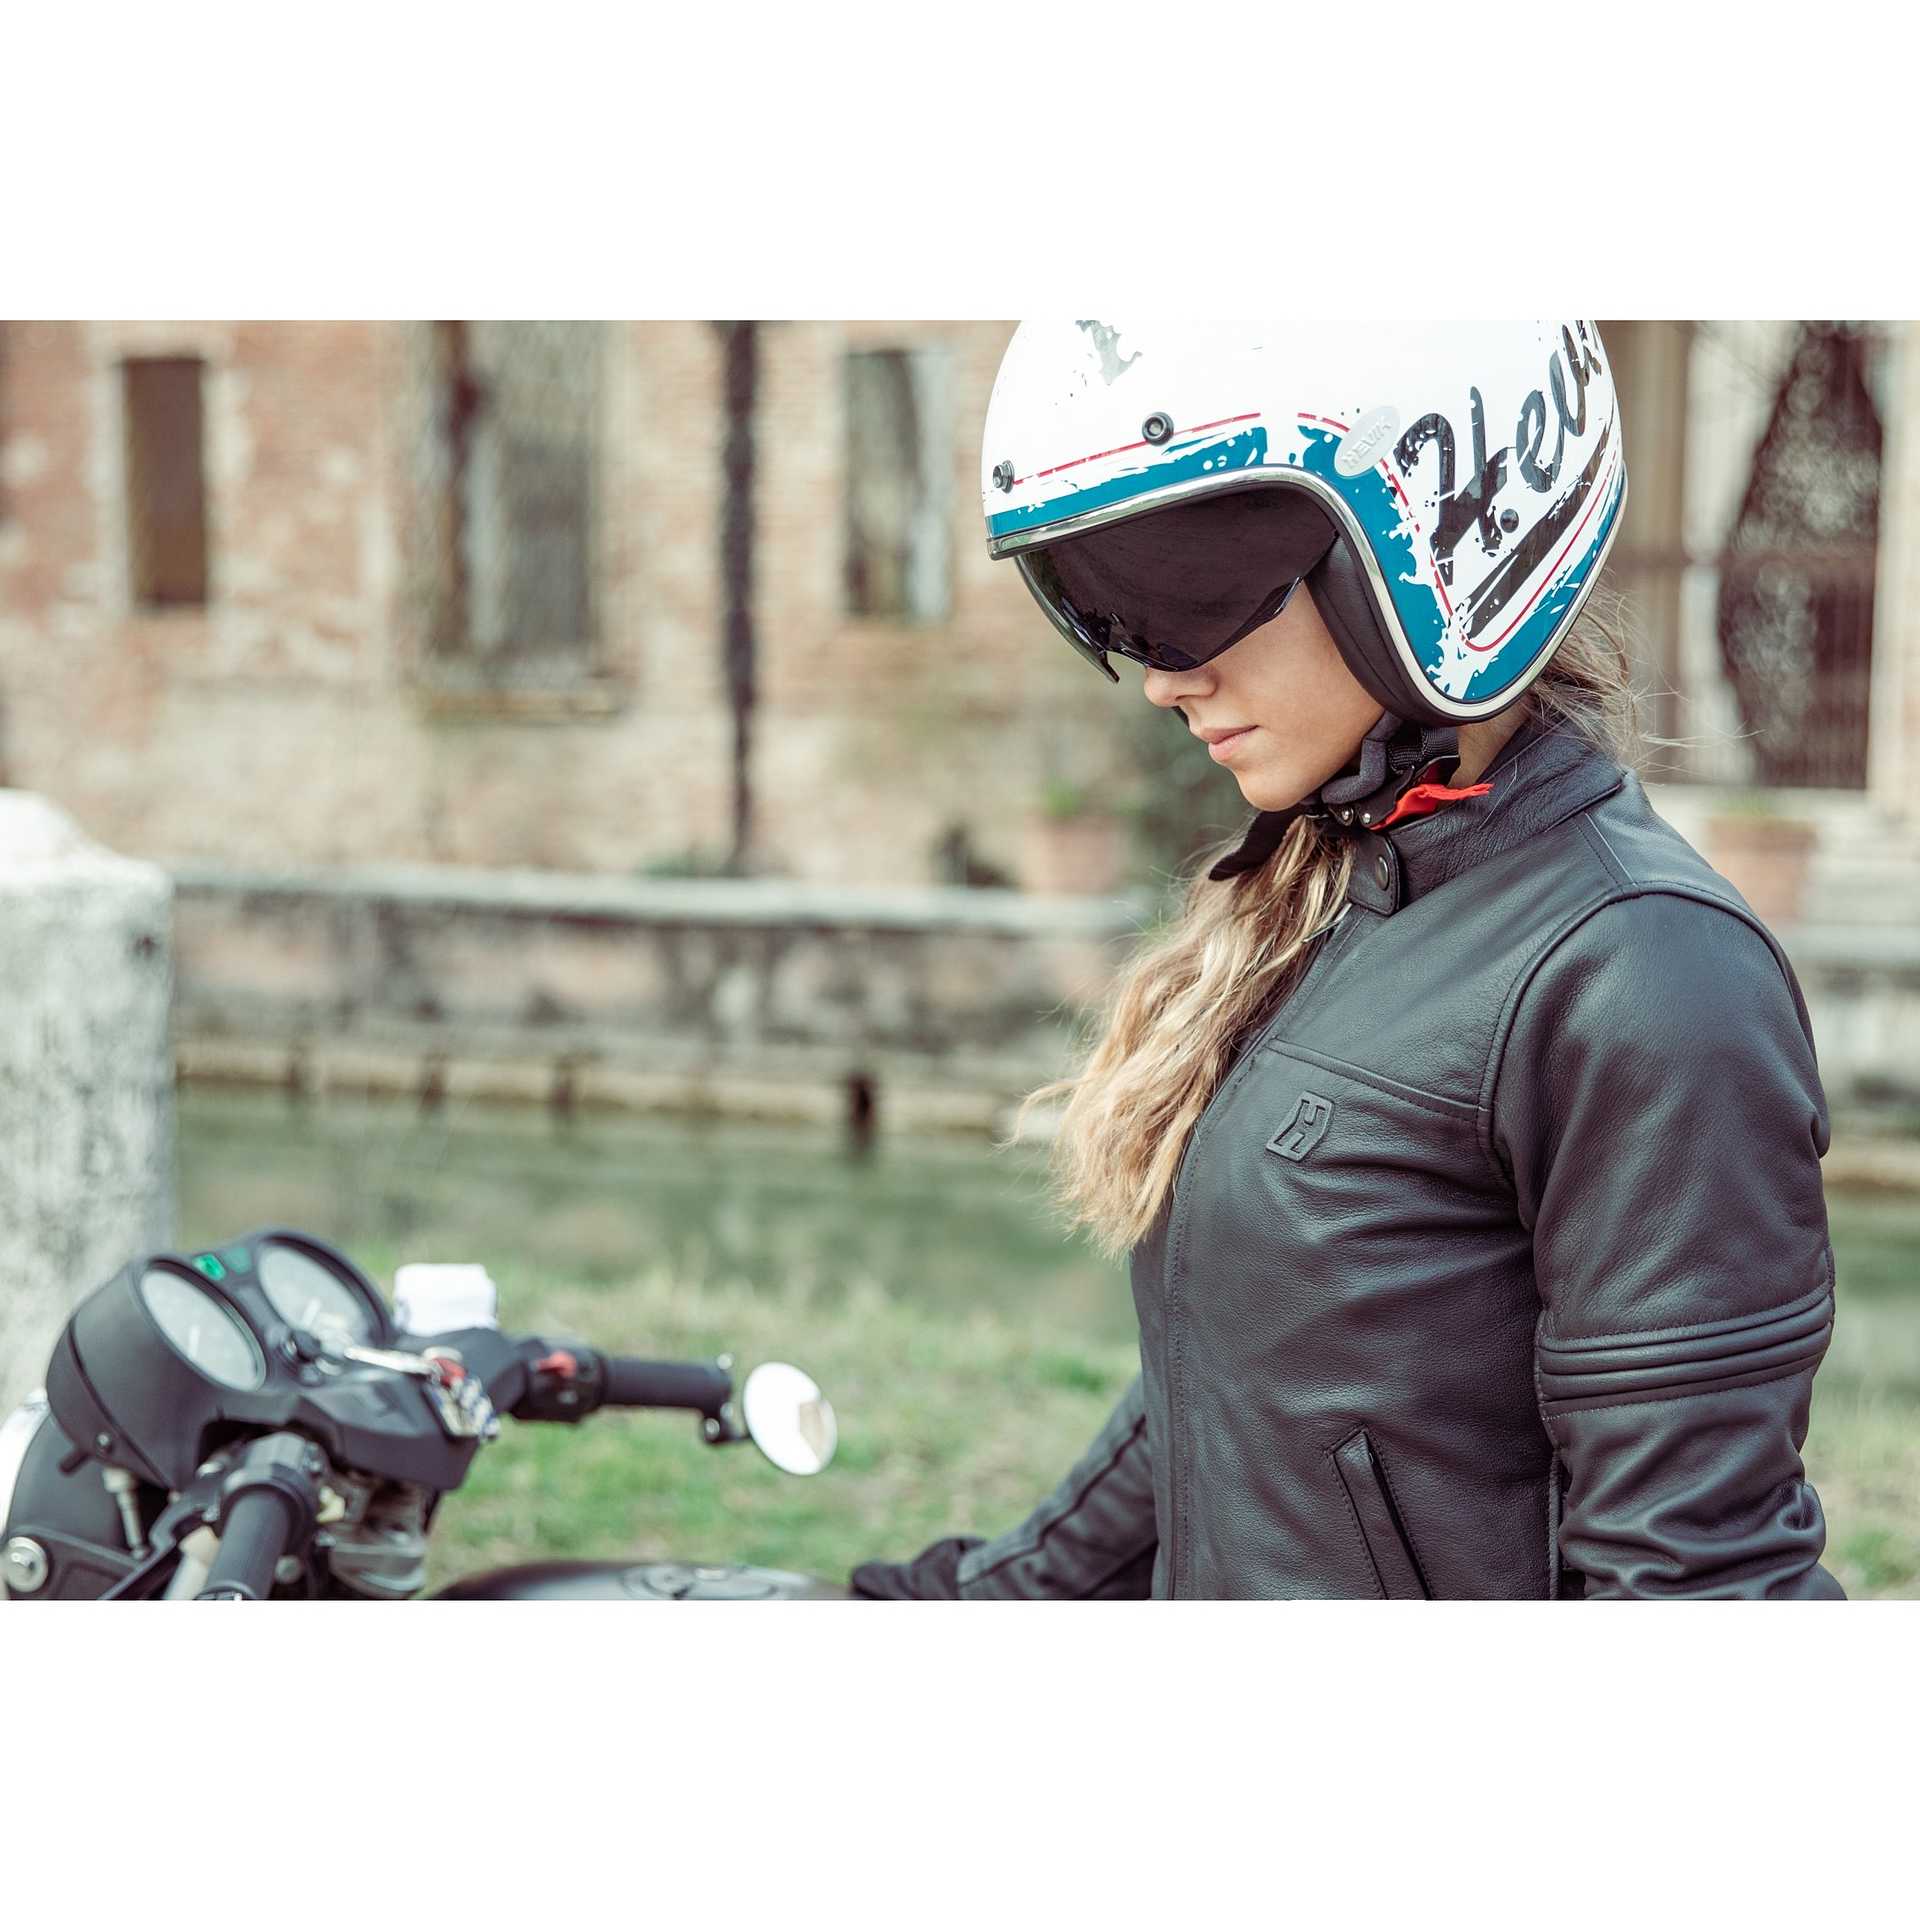 Custom Motorcycle Jackets - Motorcycle Clothing